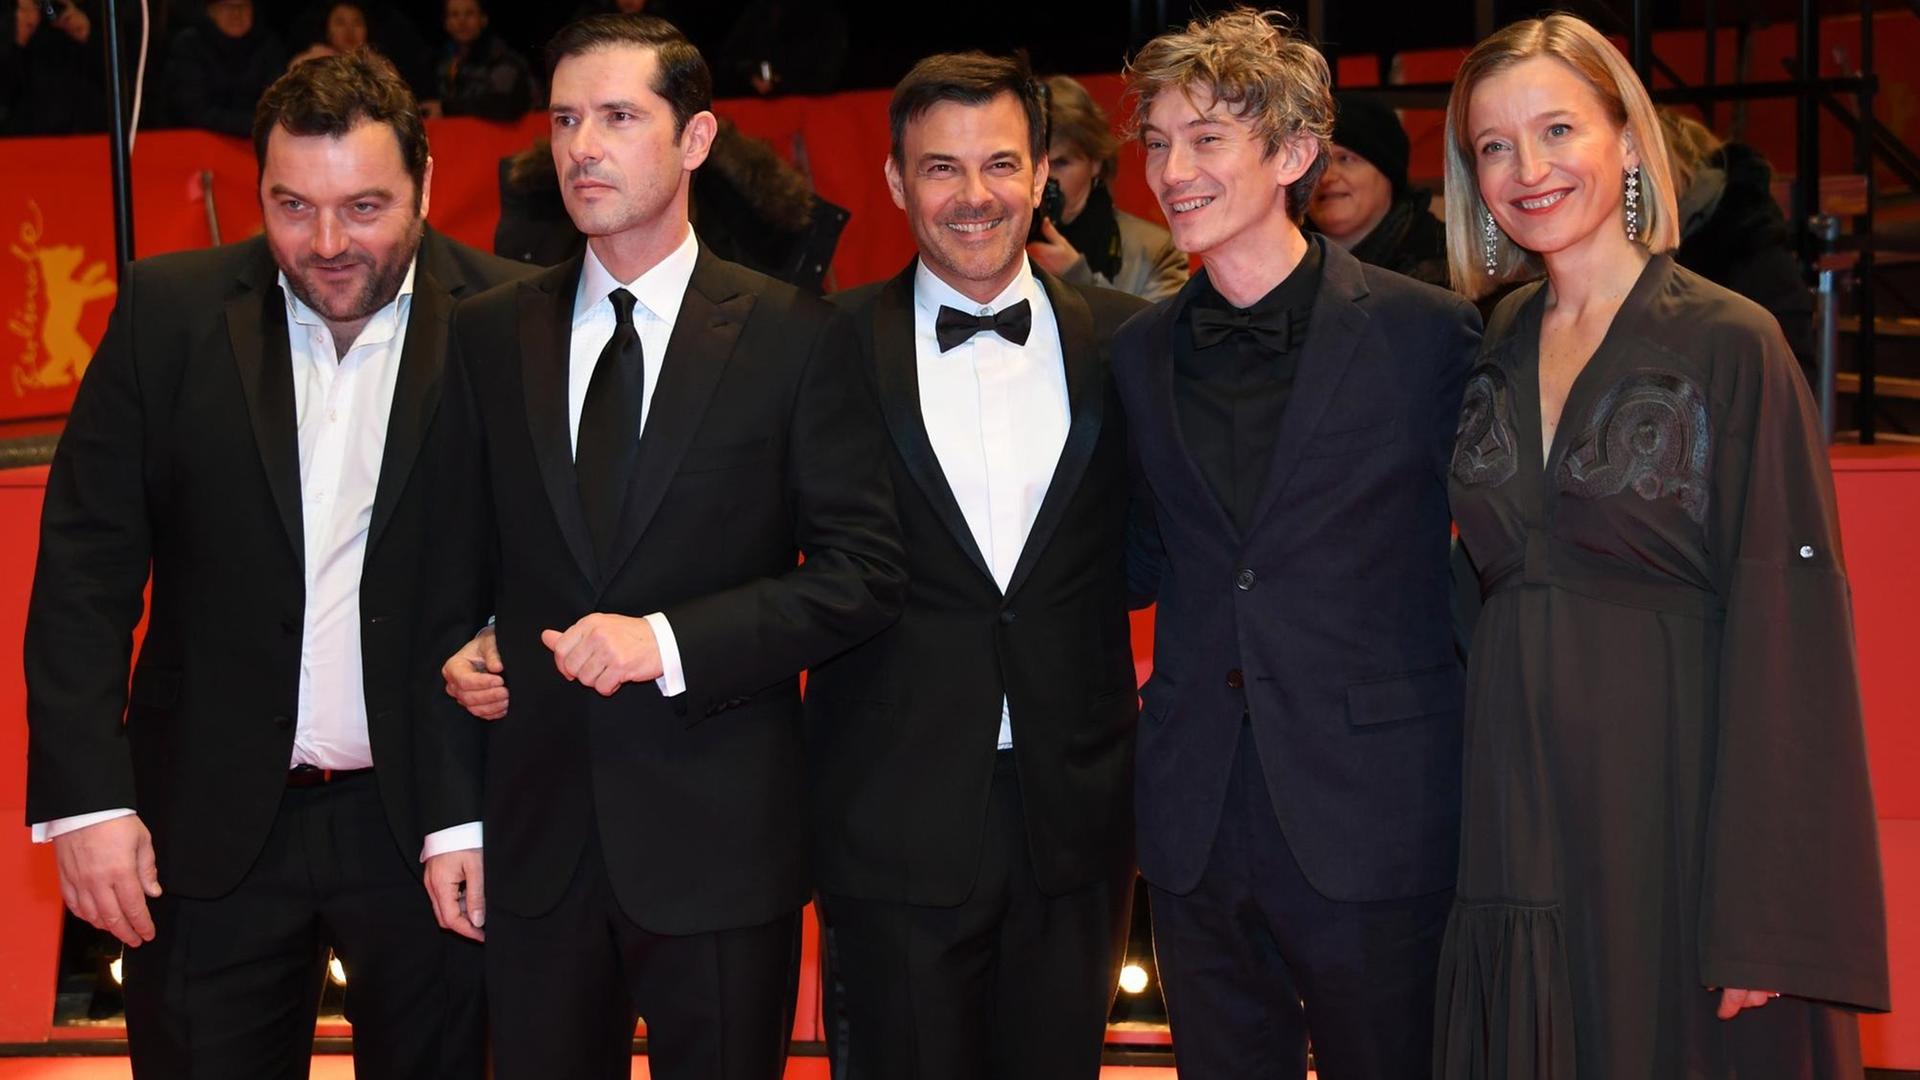 Denis Menochet, Melvil Poupaud, Francois Ozon, Swann Arlaud und Aurelia Petit auf dem Roten Teppich der Berlinale 2019.